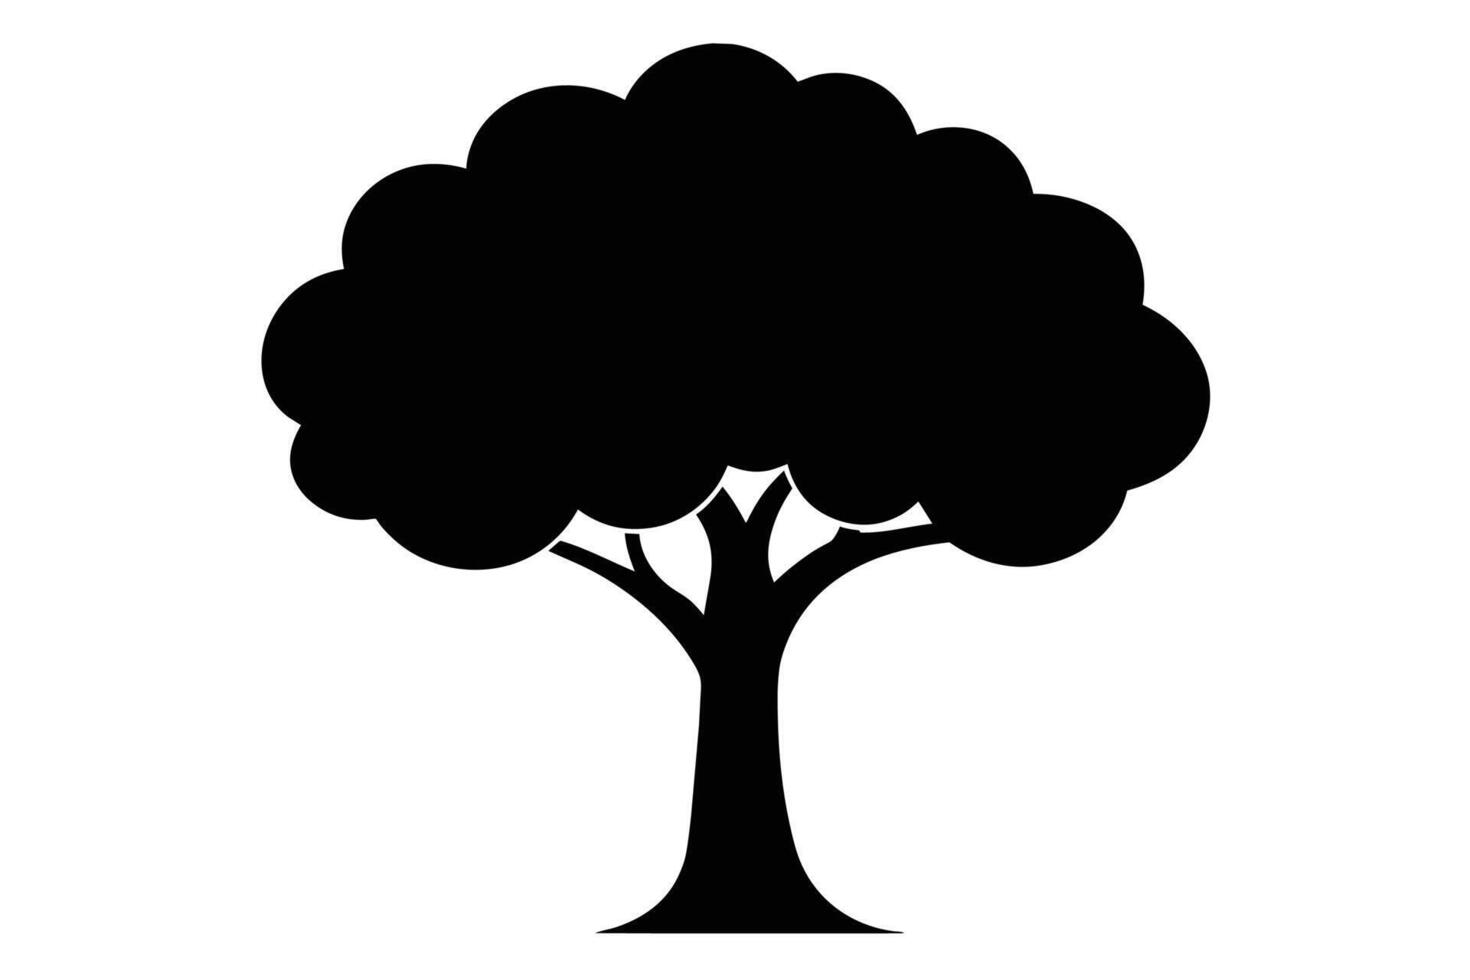 negro árbol vector aislado en blanco antecedentes